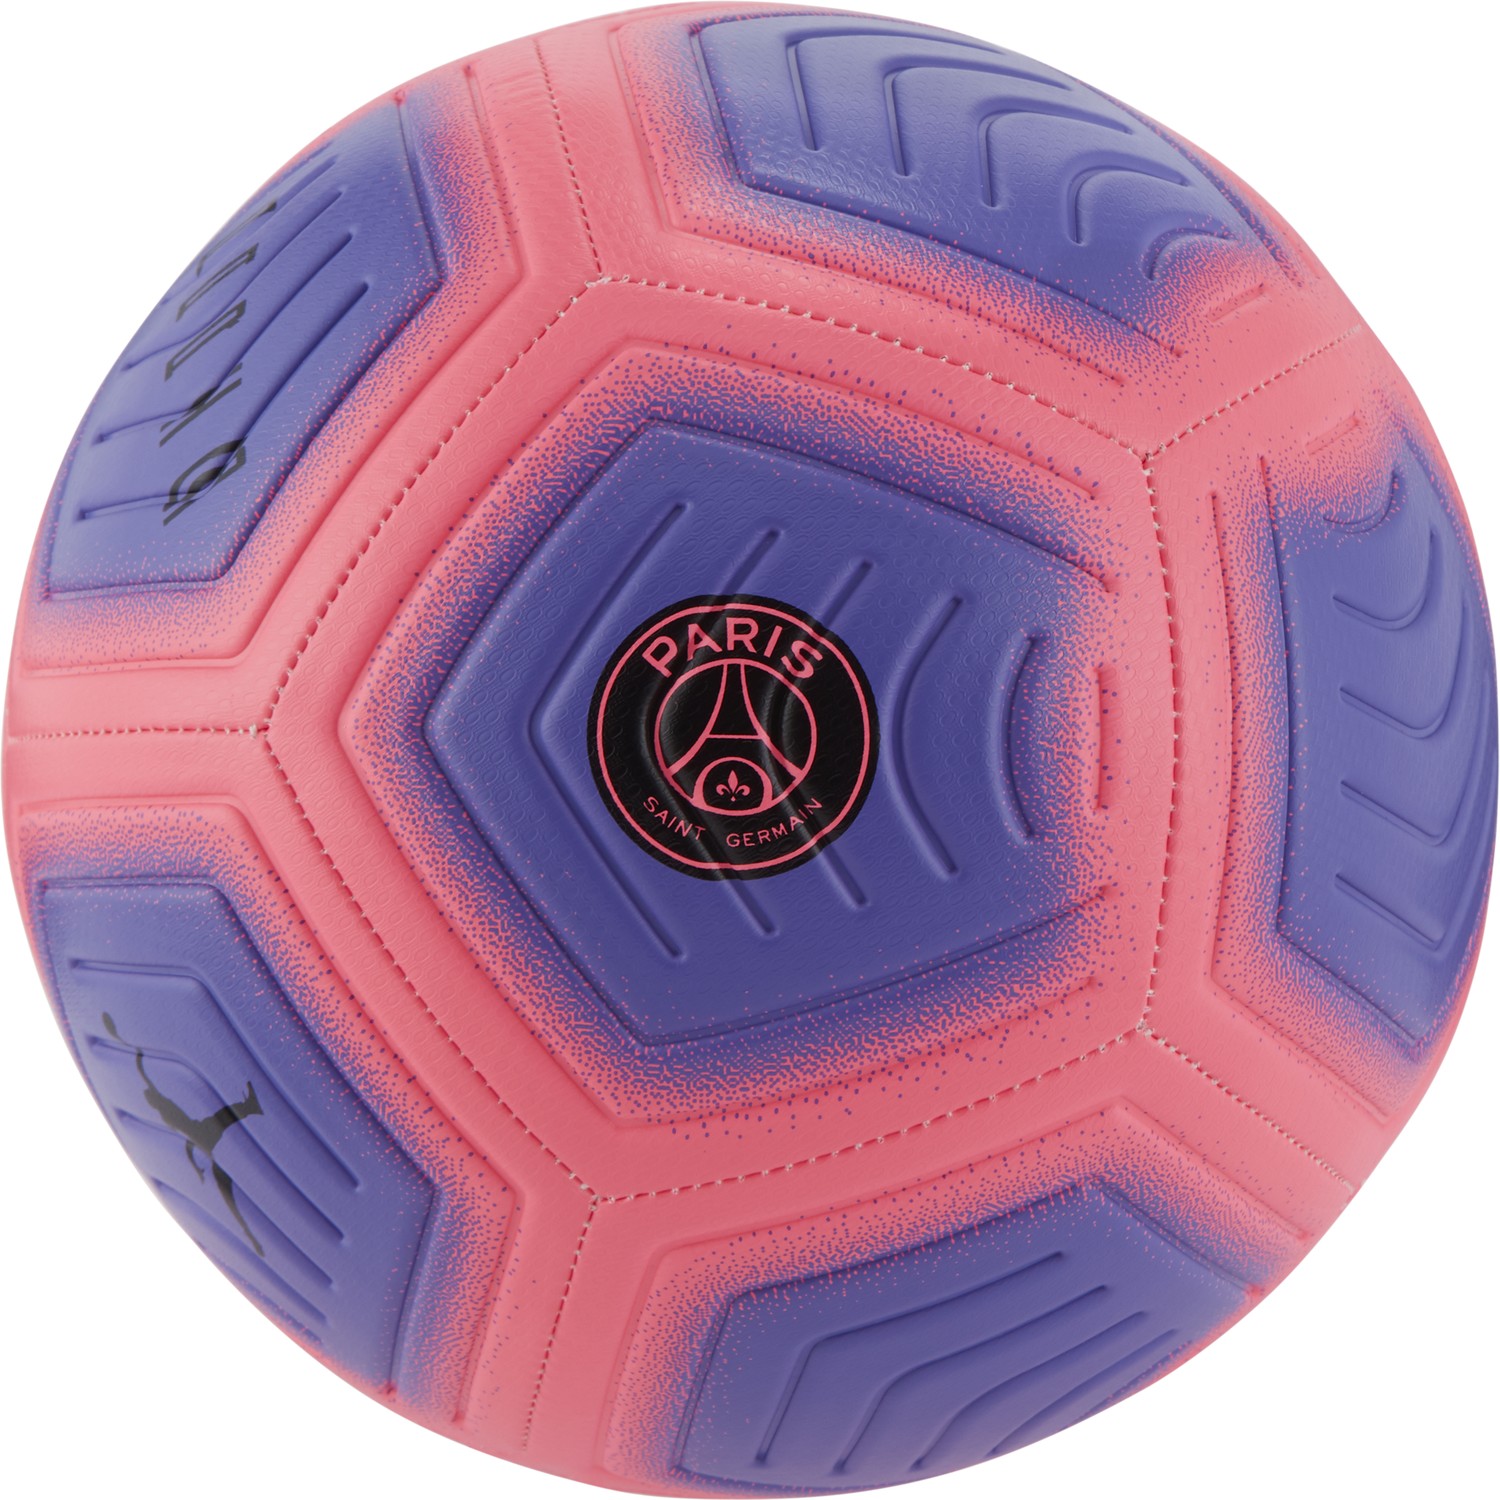 Ballon PSG x Jordan Strike violet 2020/21 sur Foot.fr